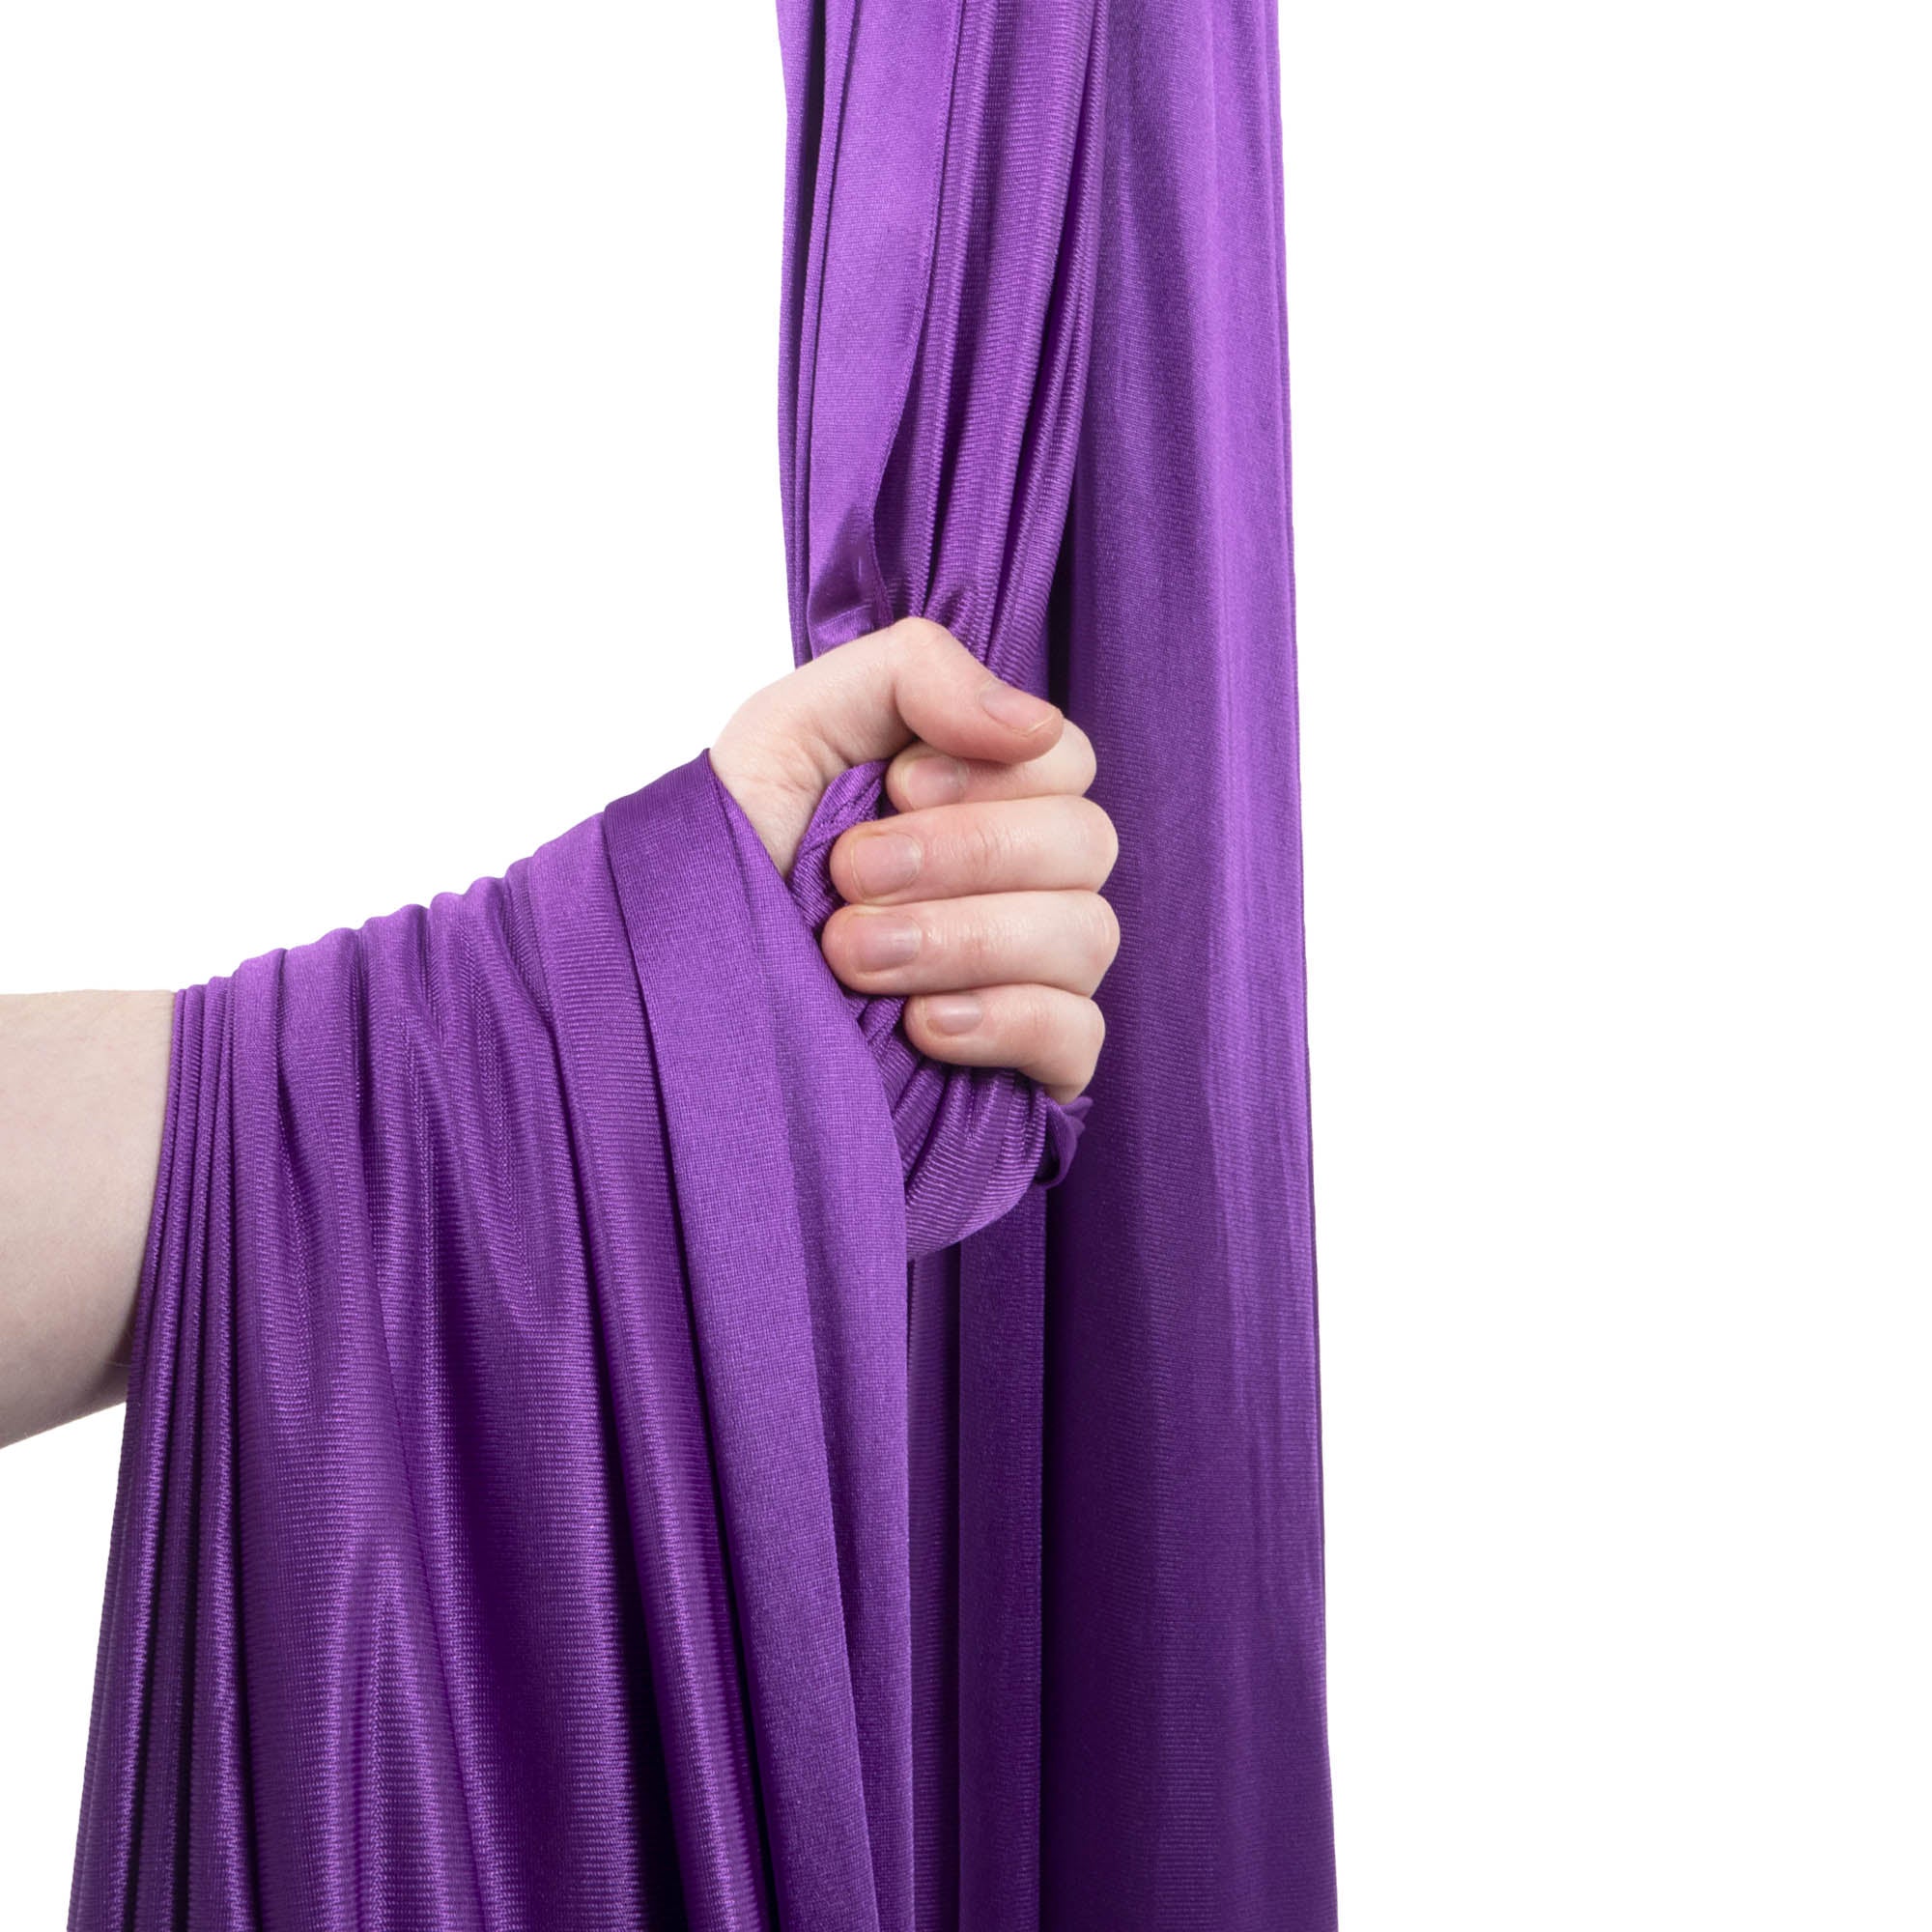 Purple yoga hammock wrapped around hand